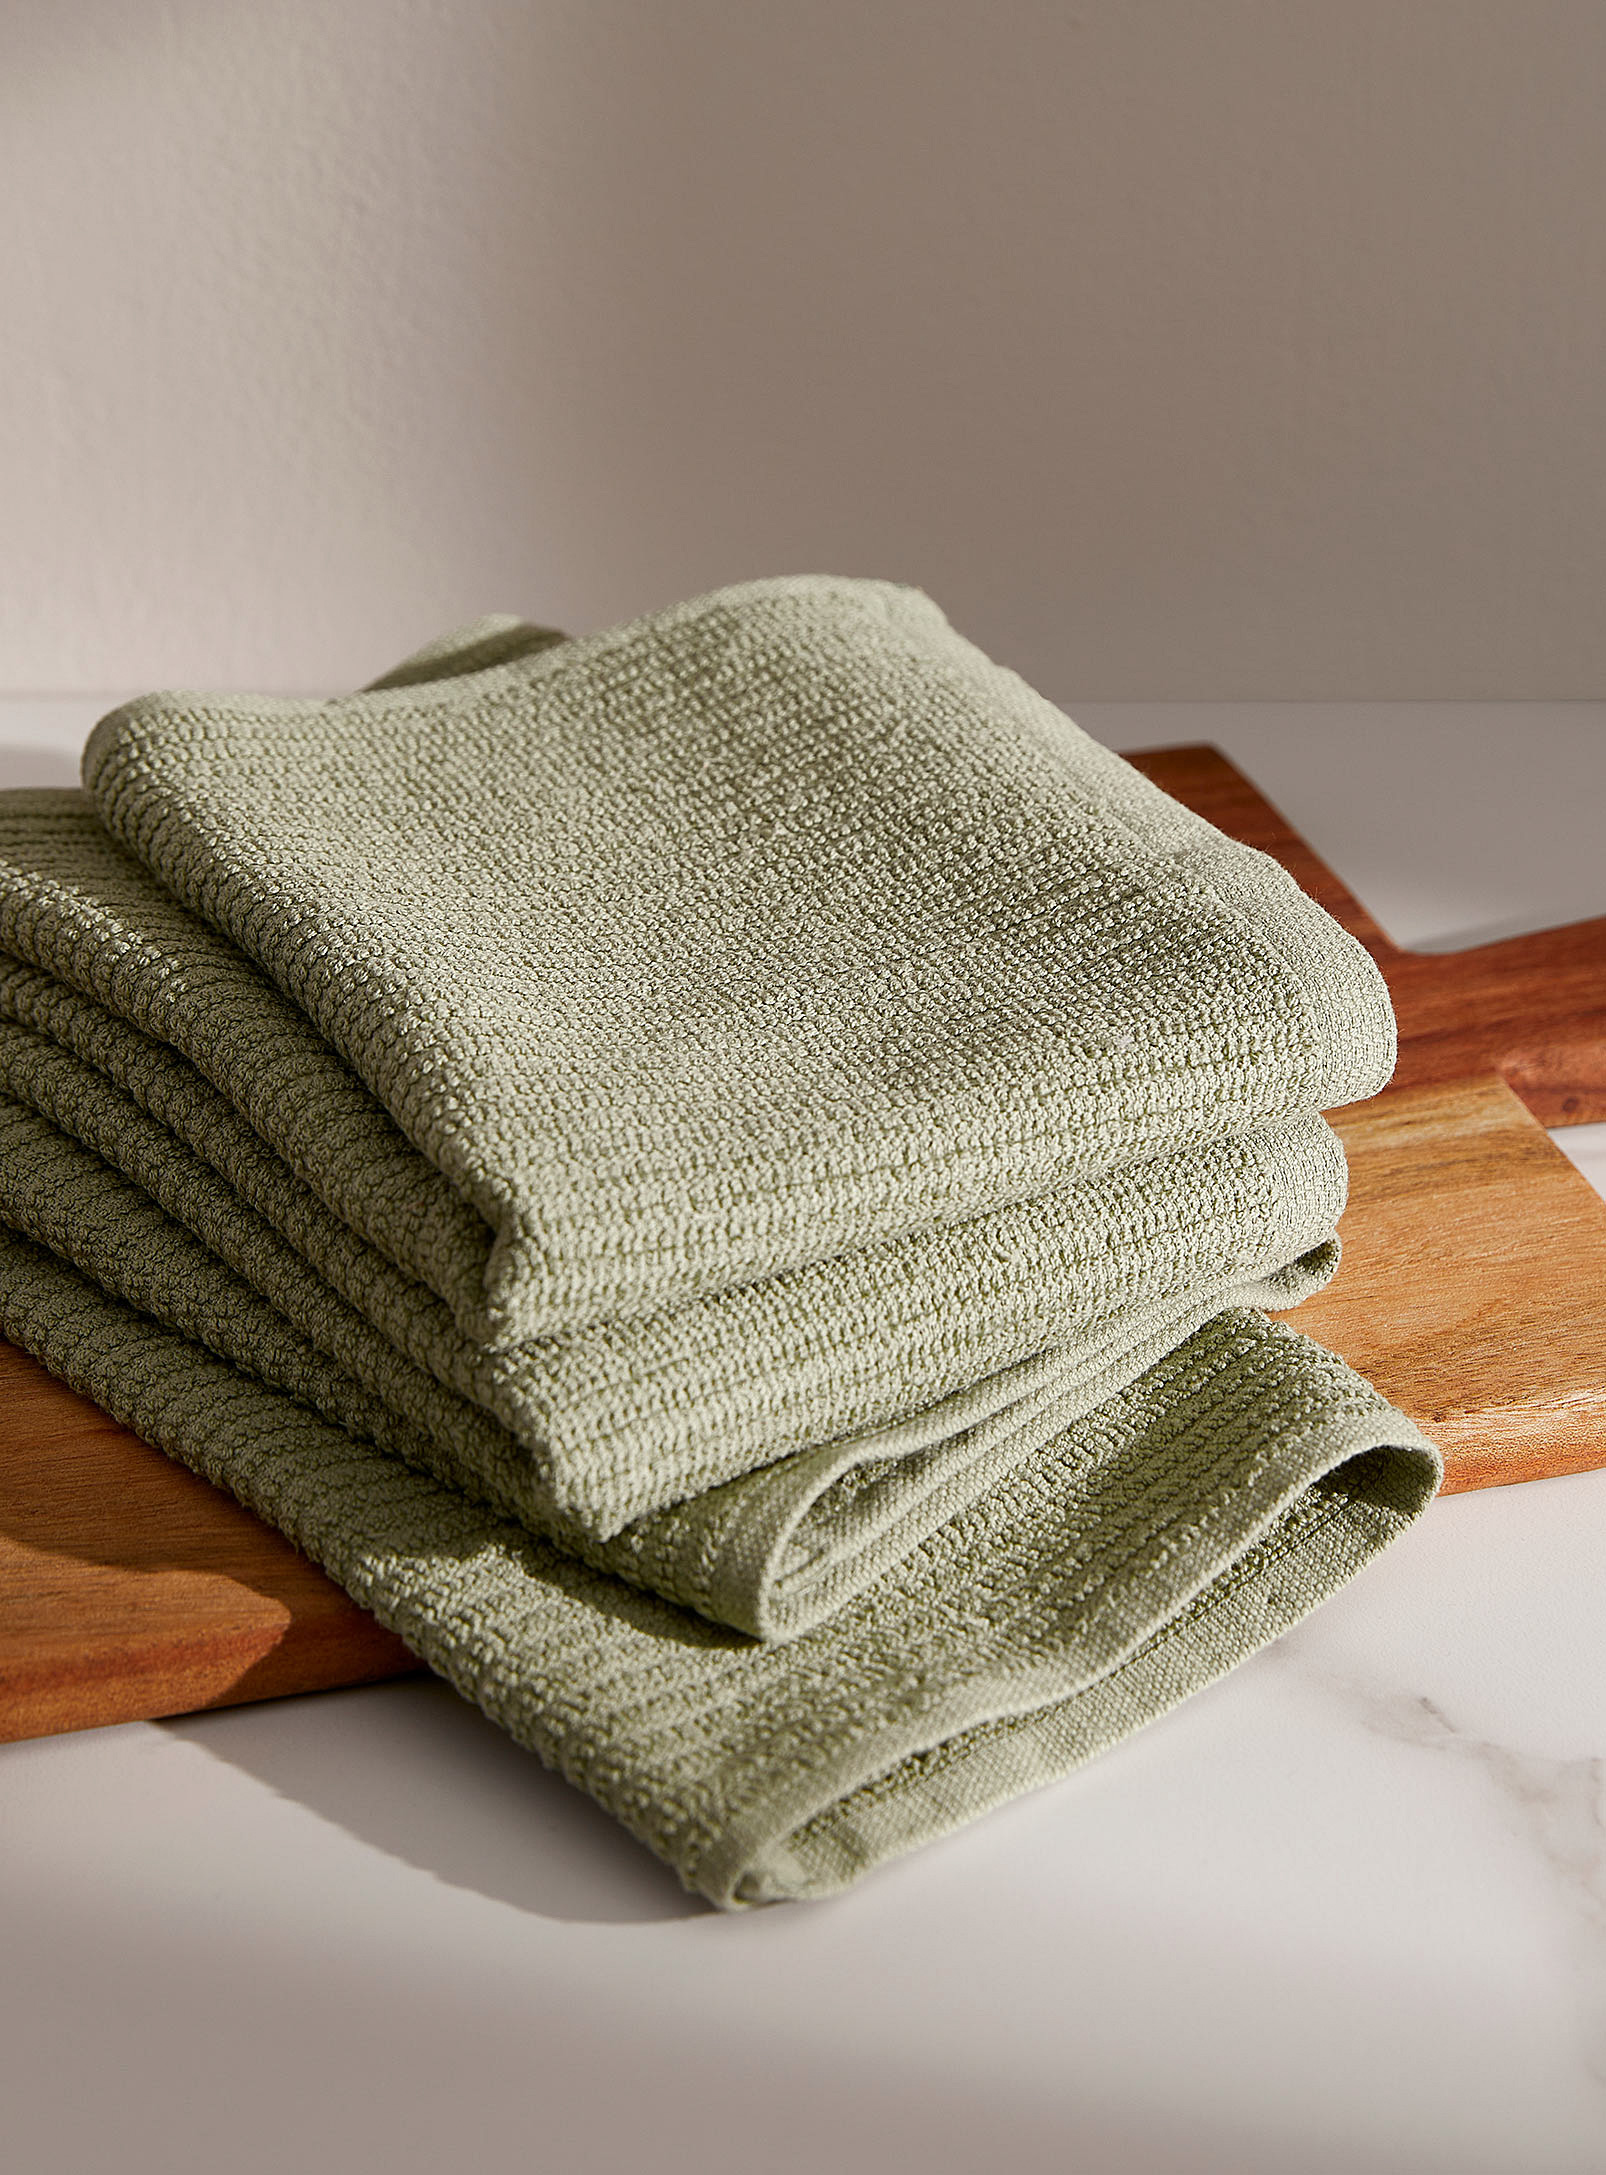 Danica Grooved Tea Towels Set Of 3 In Green